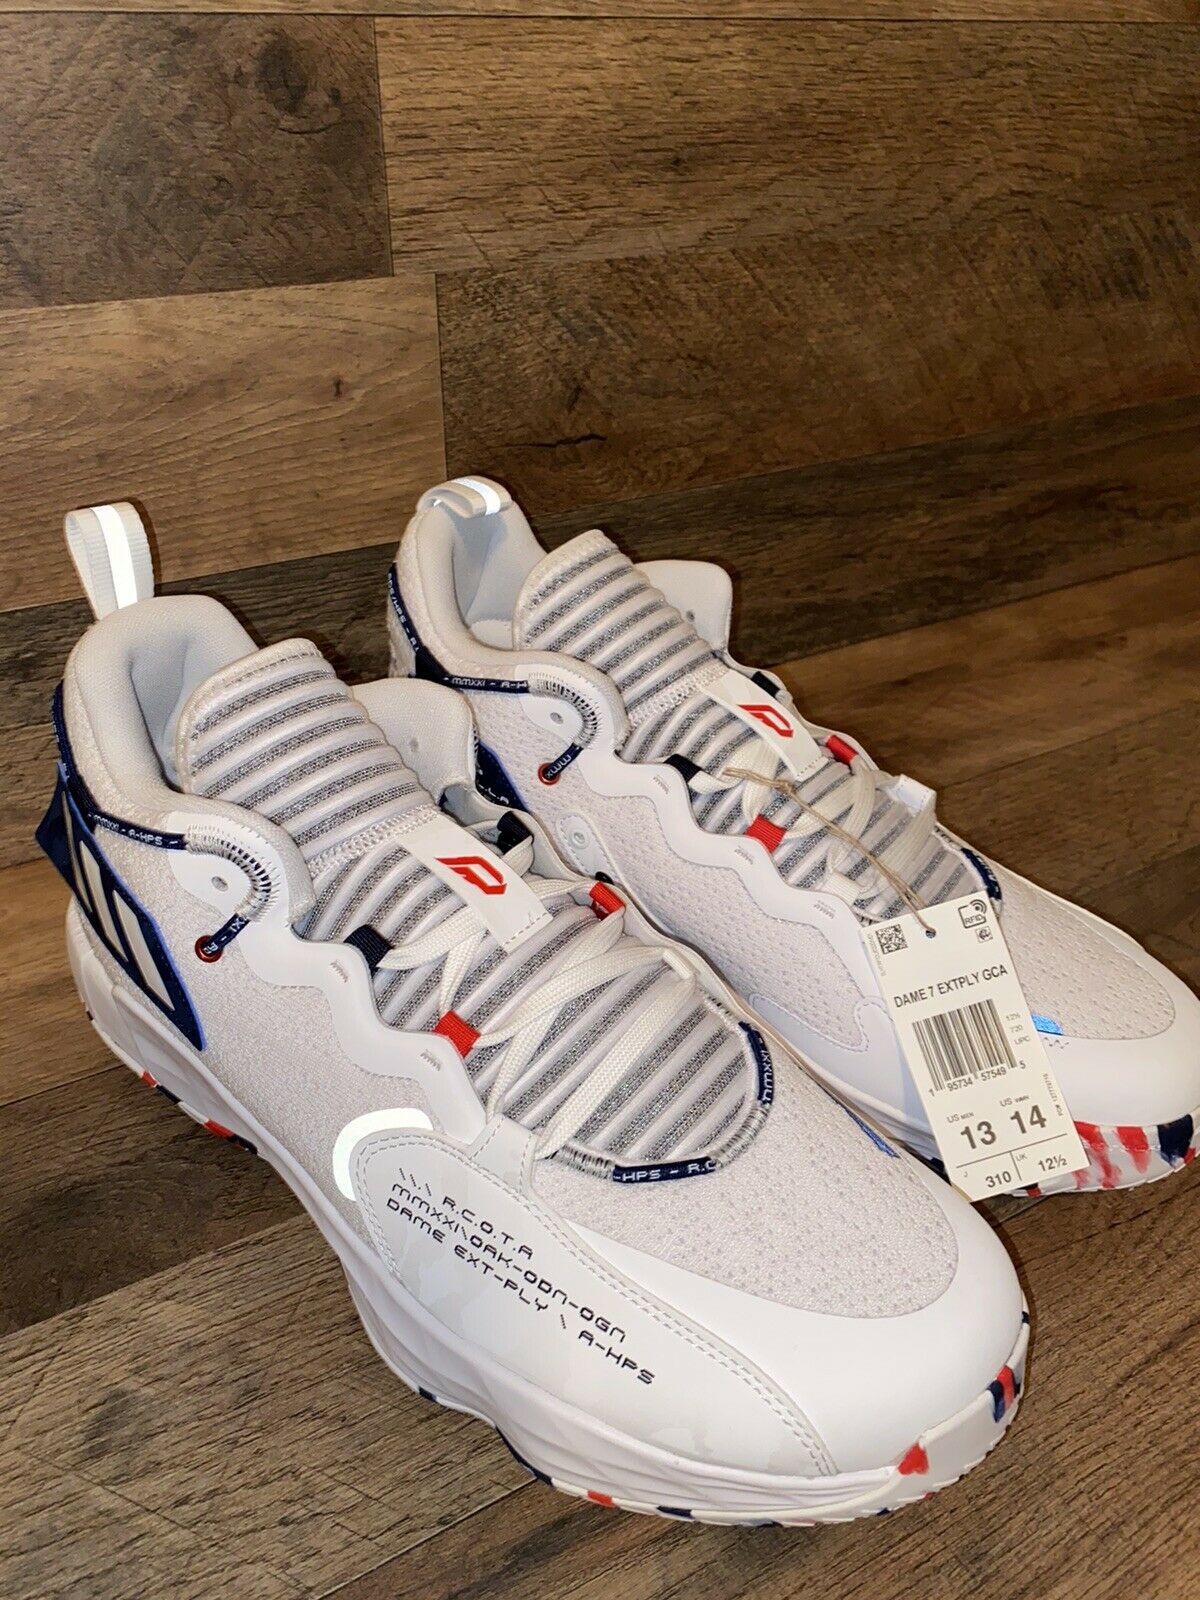 Adidas Dame 7 EXTPLY GCA USA Mens Basketball Shoes Size 13 White Navy Red GW2946